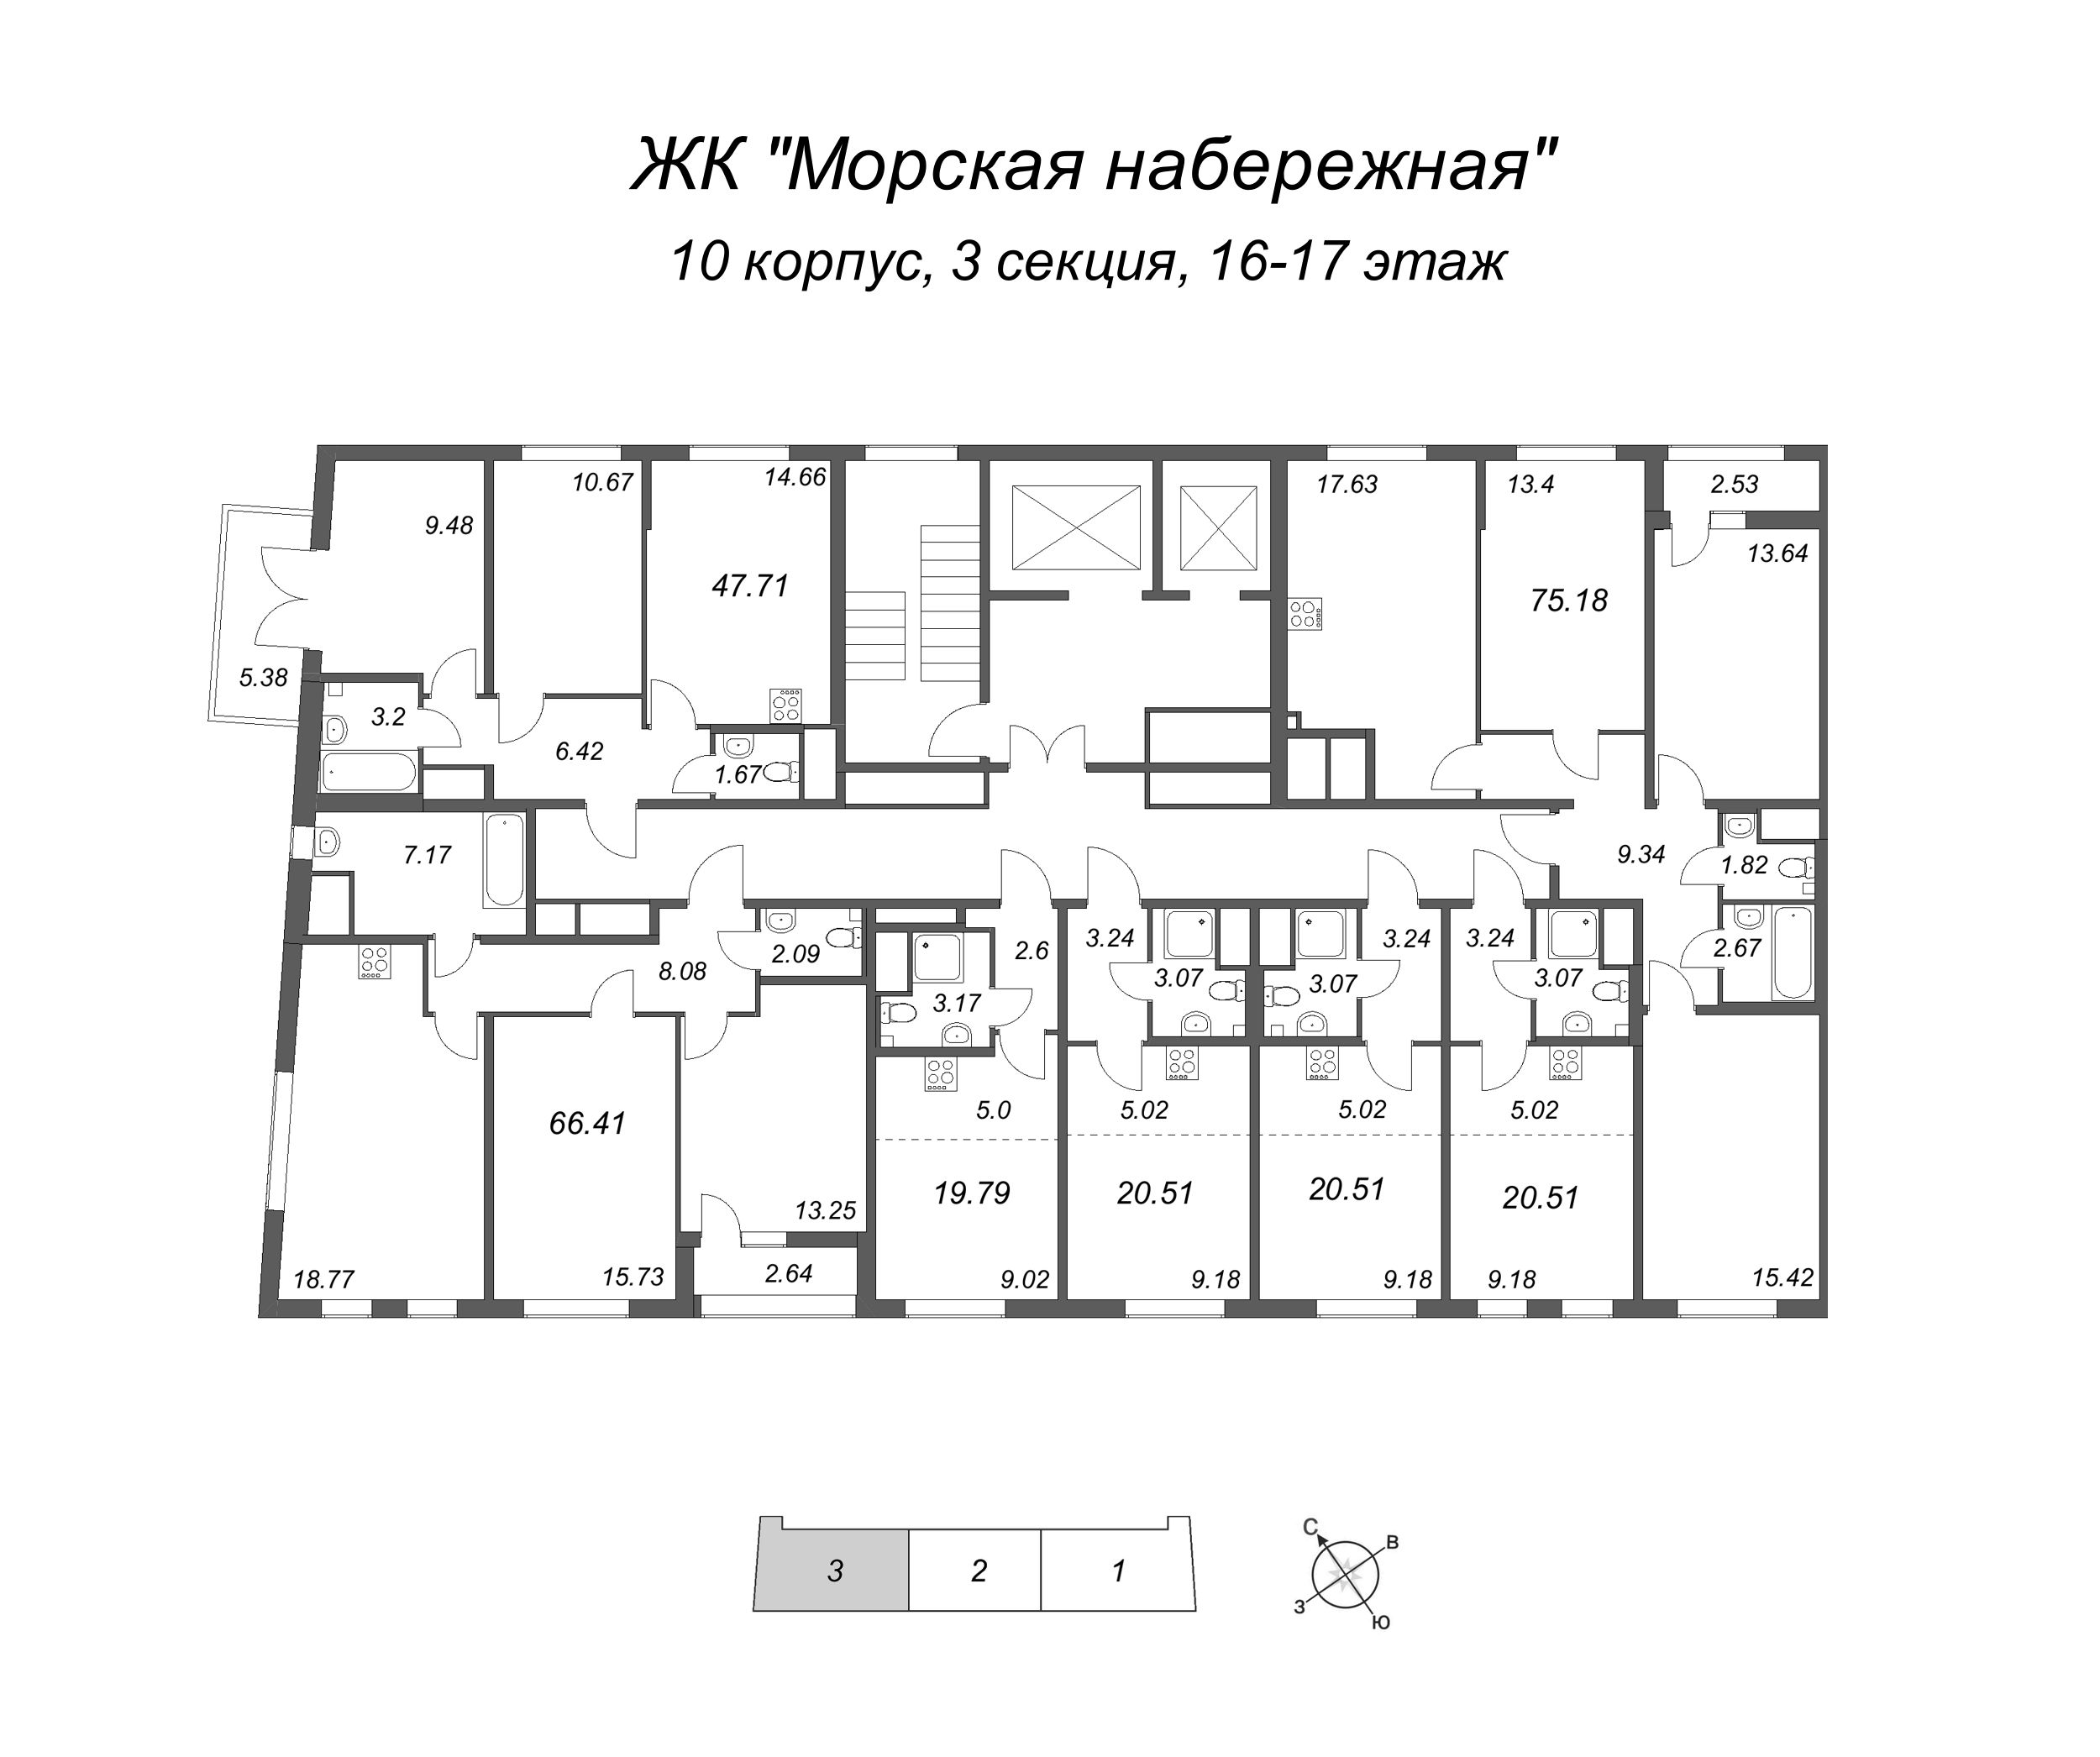 3-комнатная (Евро) квартира, 66.41 м² - планировка этажа